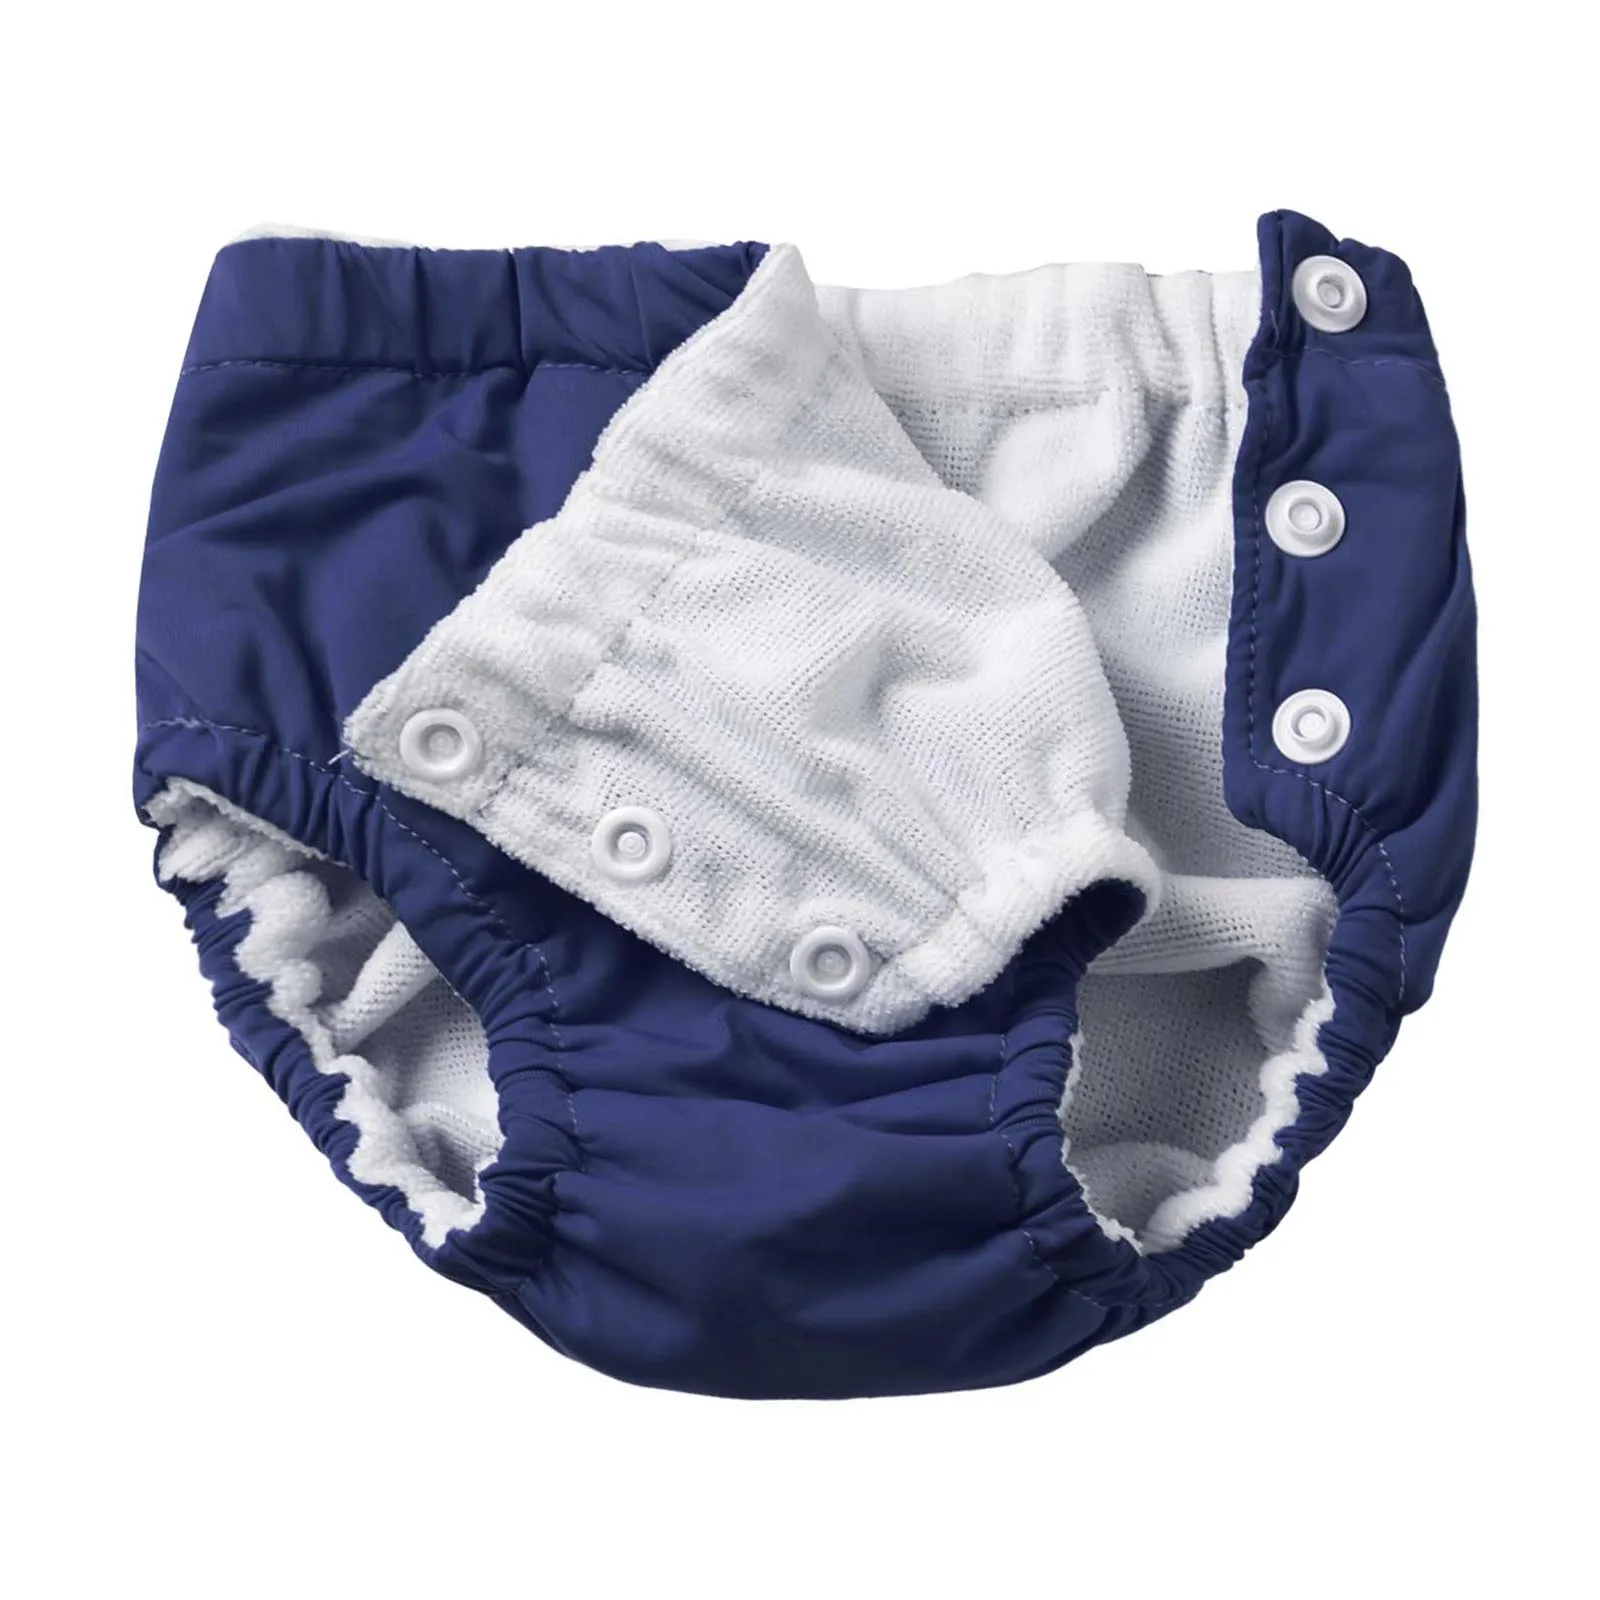 Baby Swim Nappy Diaper Cover Infant Toddler Waterproof Swim Nappies Swimming Trunks Pool Pants Kids Boys Girls Shorts Panties